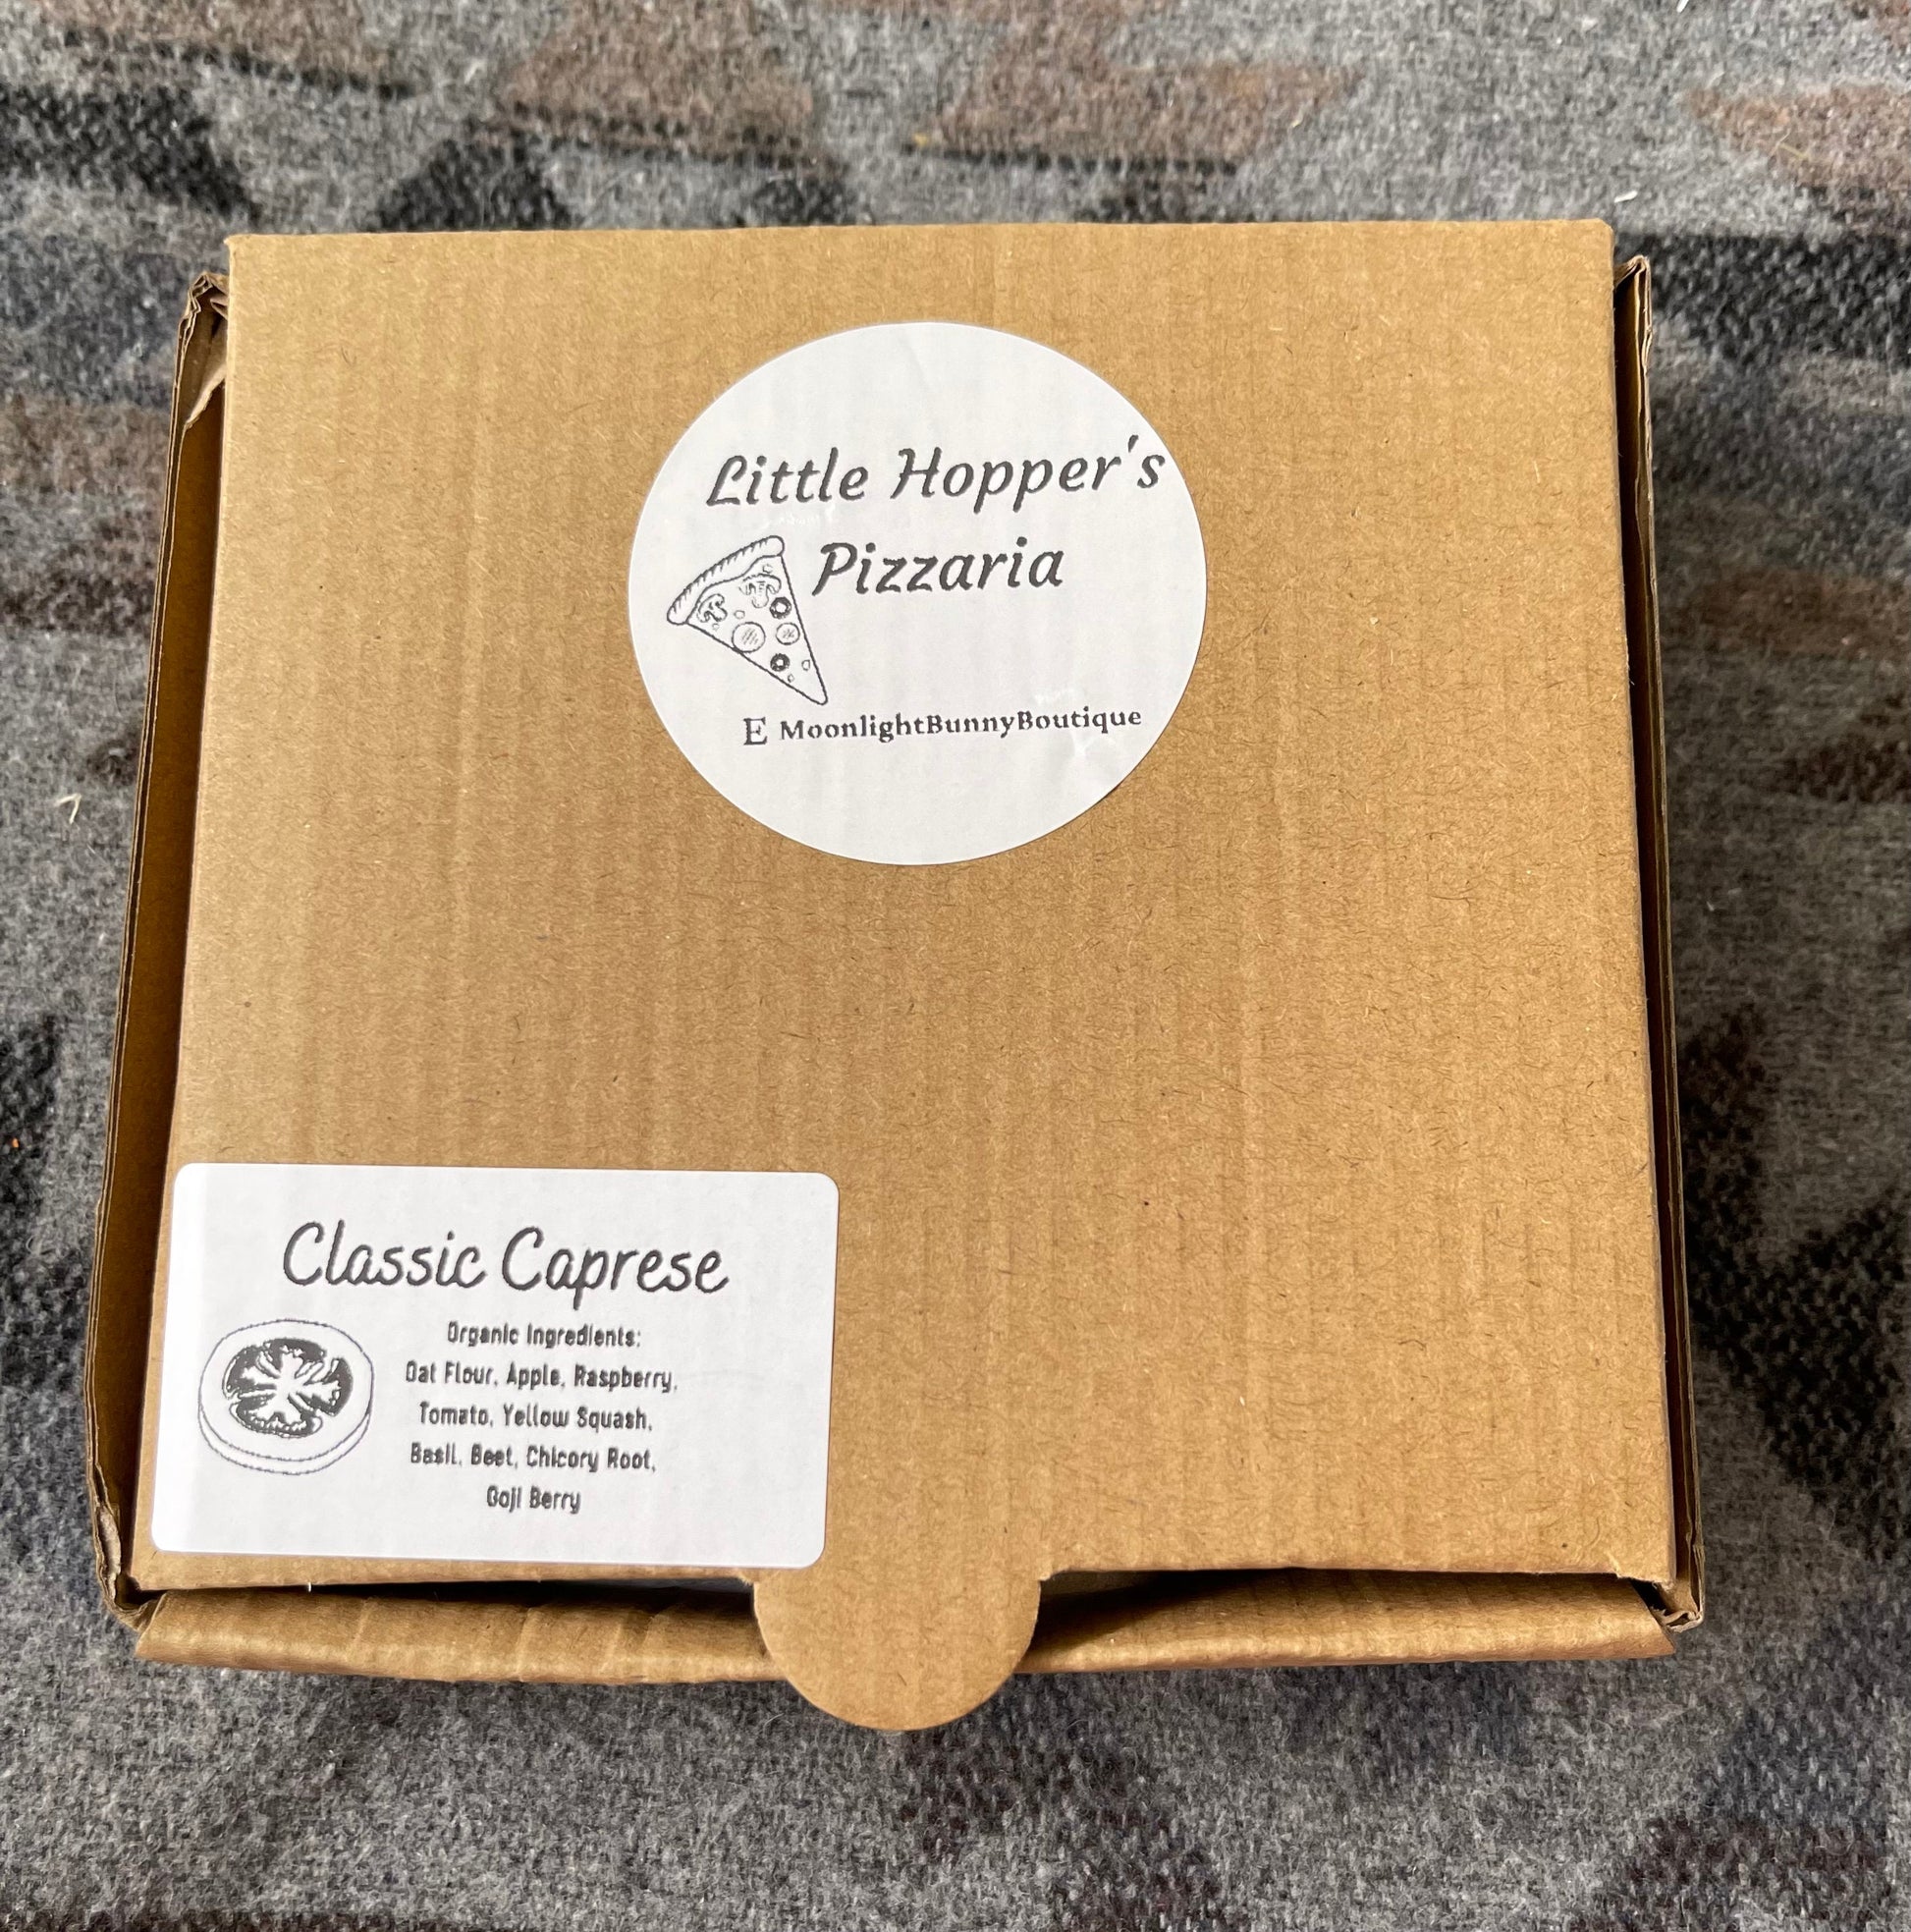 Little Hopper’s Pizza~ cute bunny treats~ small animal treats~ chinchilla, guinea pig, hamster treats, organic, healthy, natural~enrichment